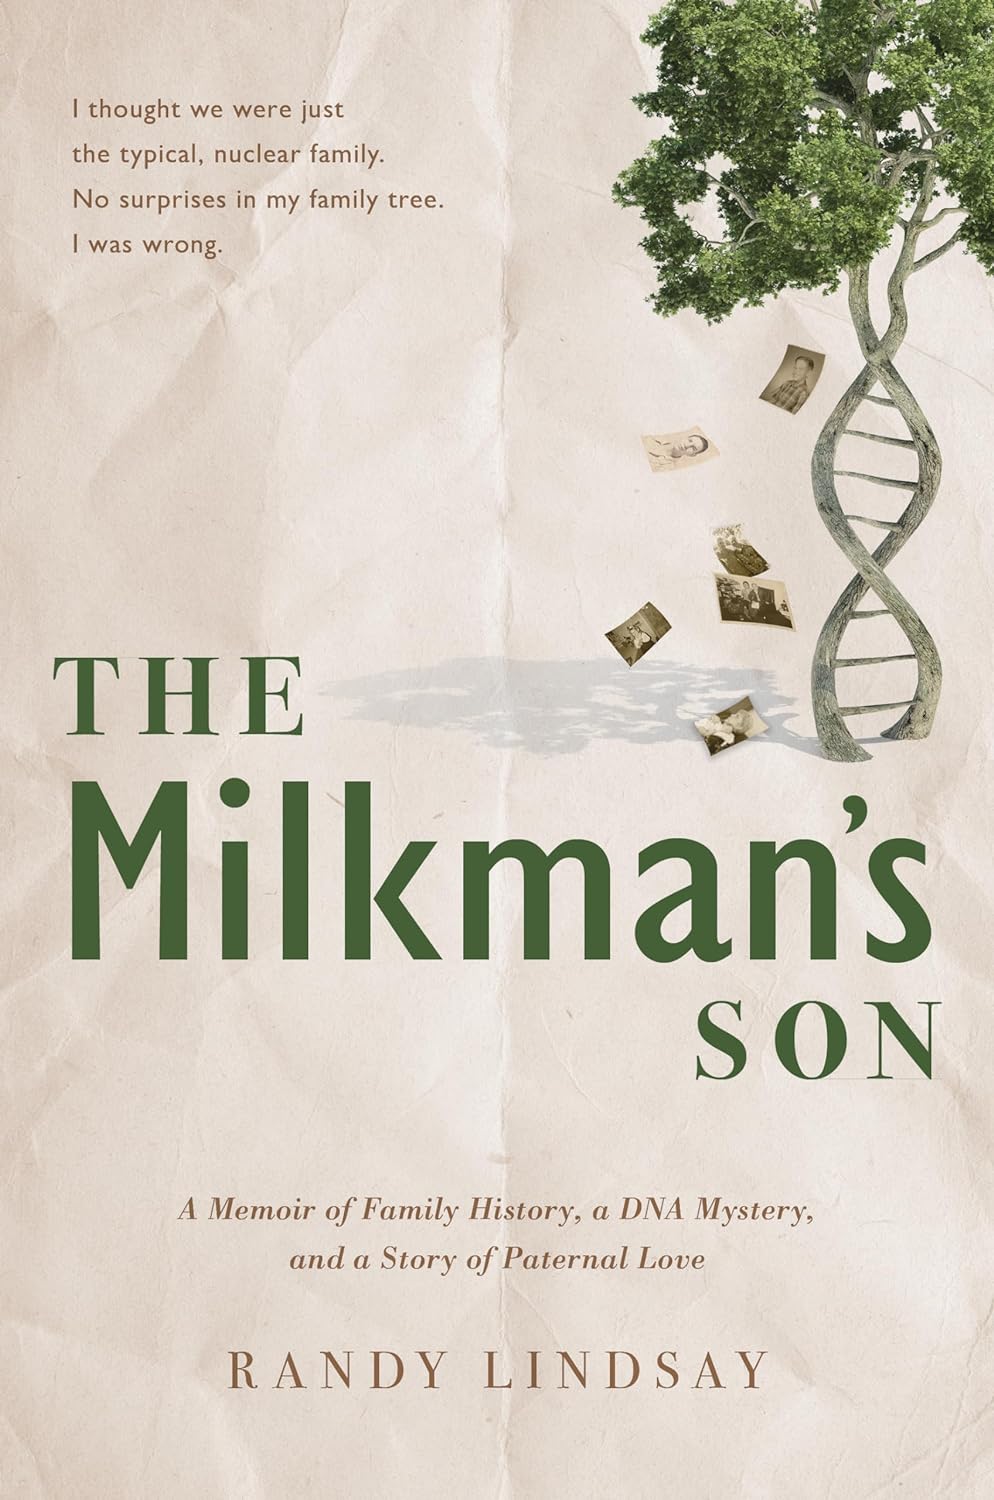 The Milkman's Son by Randy Lindsay